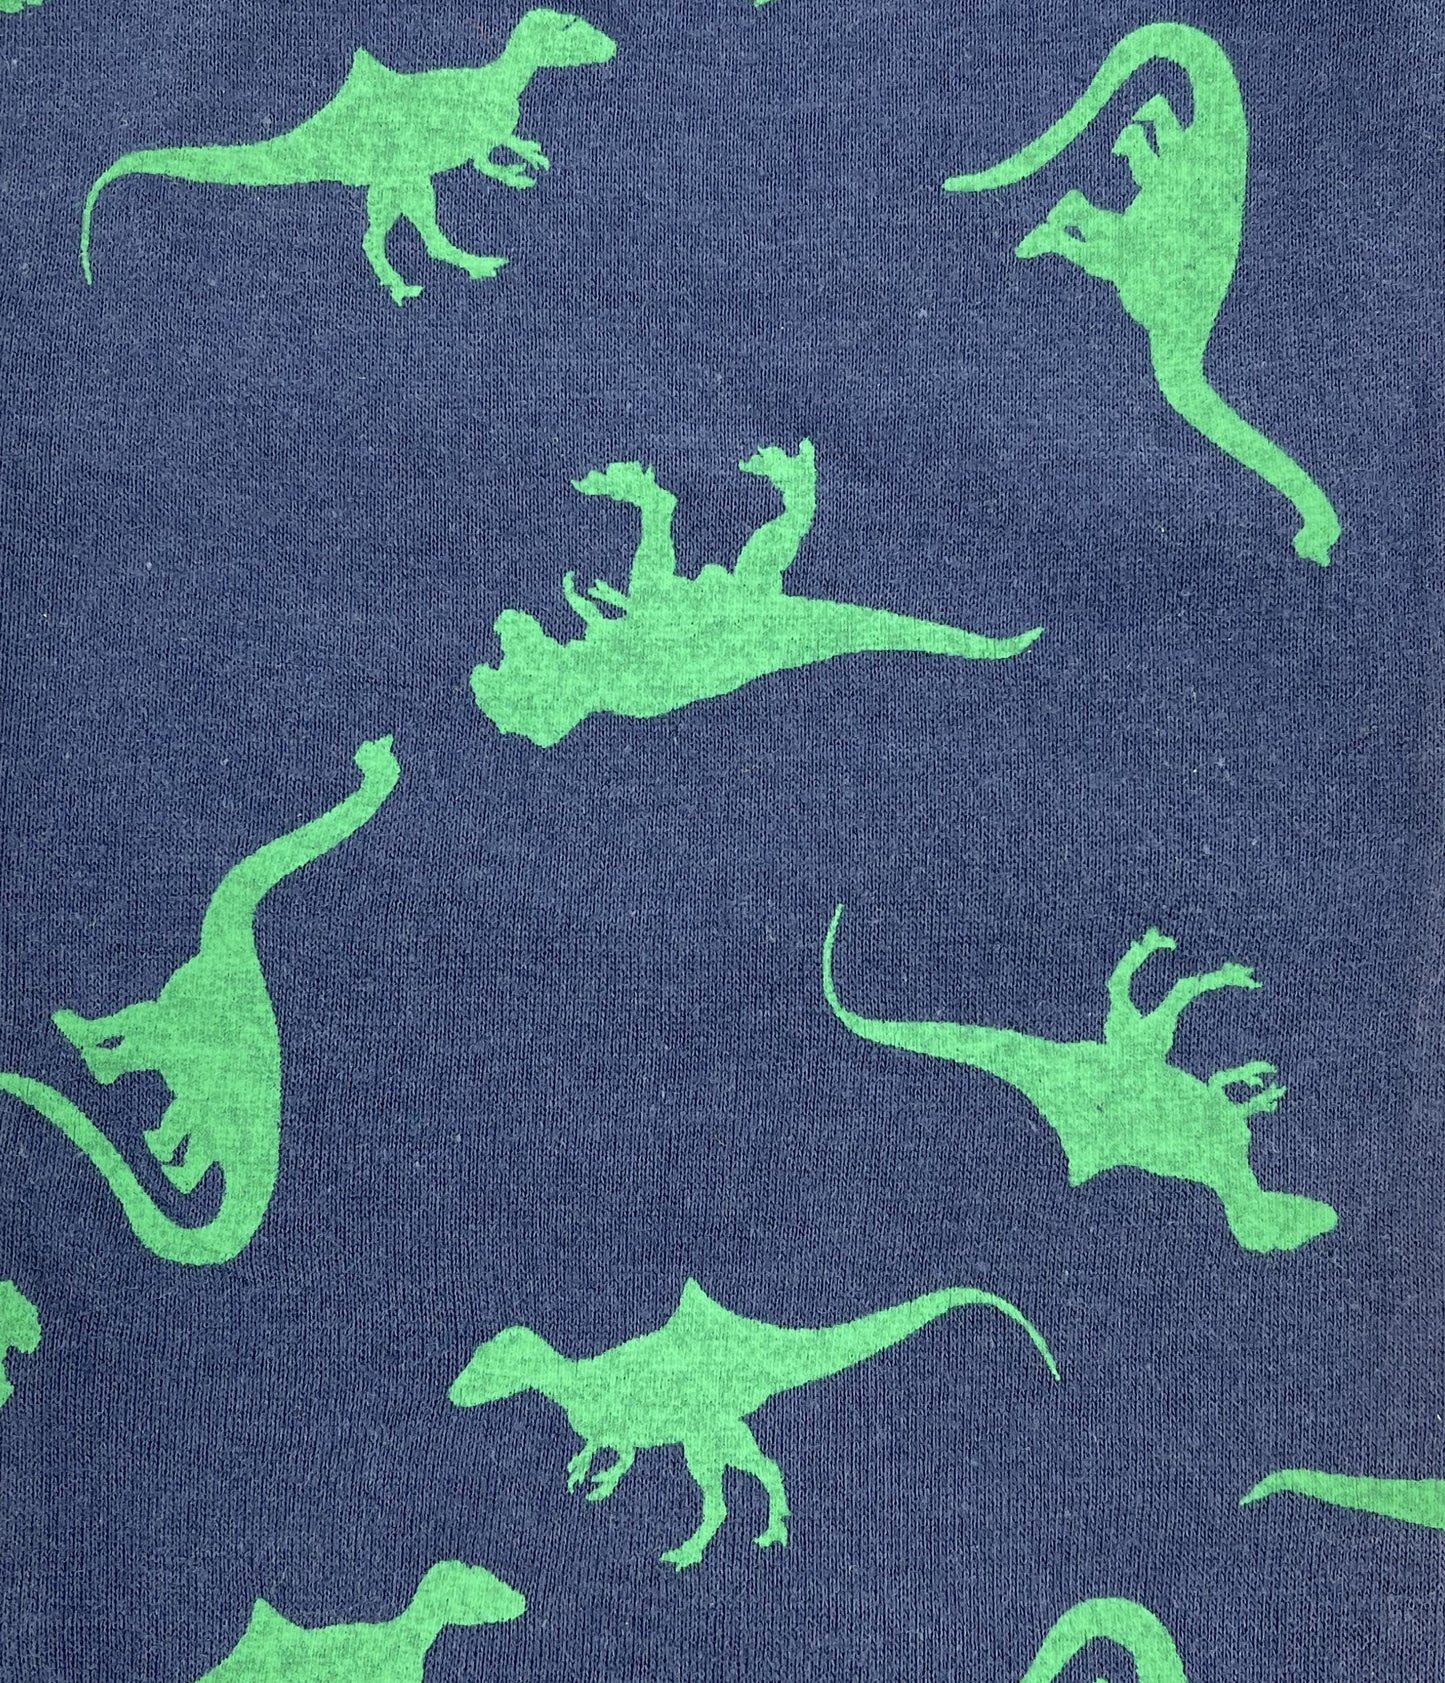 Boys Dinosaur Pyjamas Kids Navy Blue Cotton PJs with Green T-Rex Print